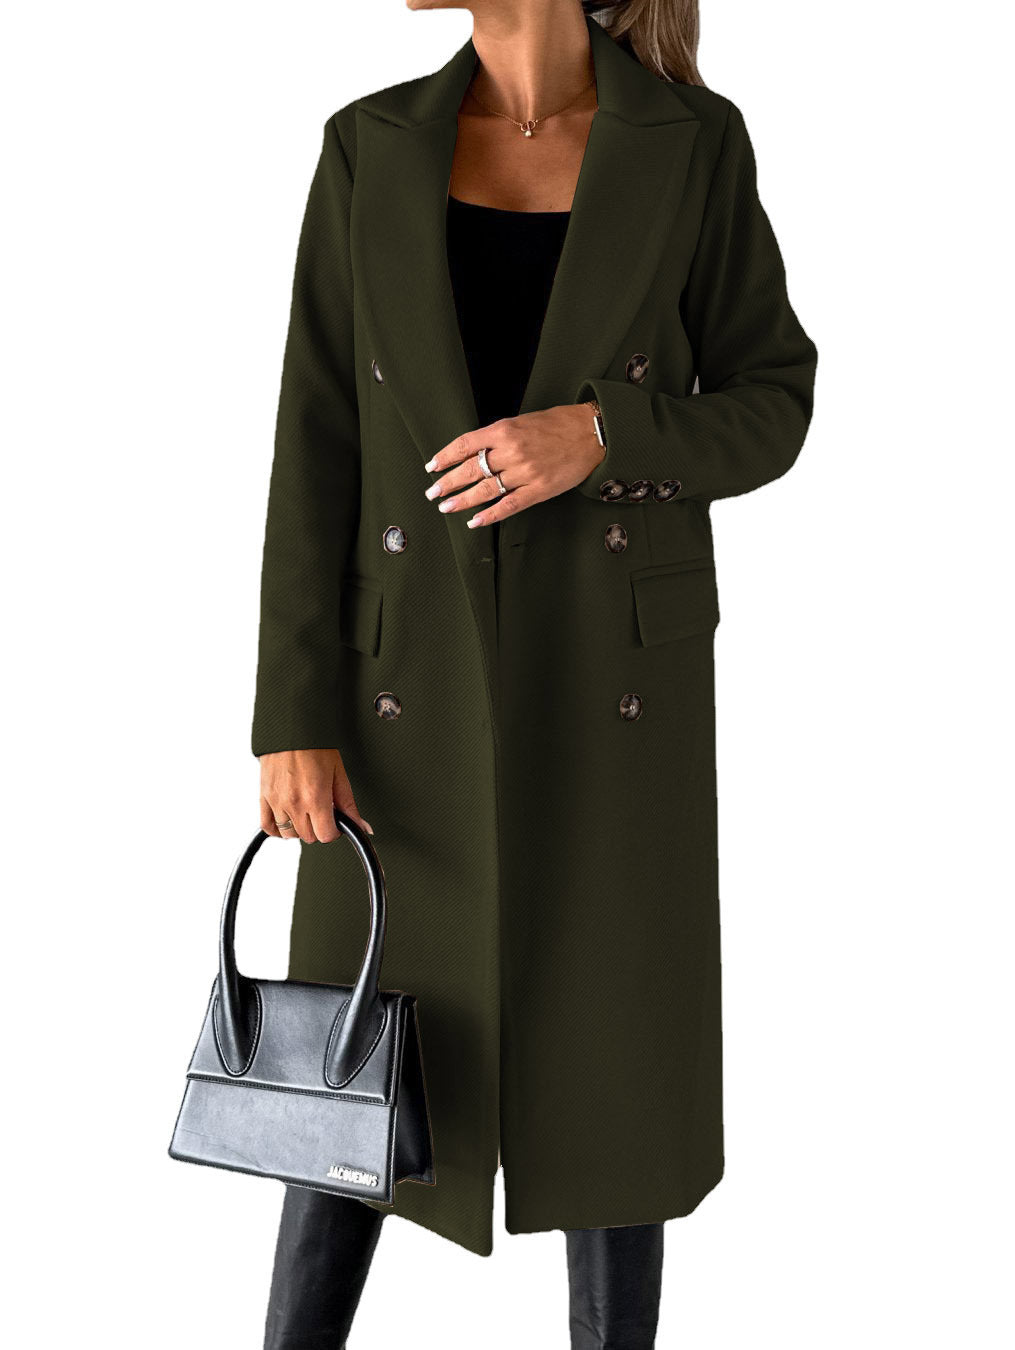 Women's Spring Woolen Solid Color Long Sleeve Double Coats